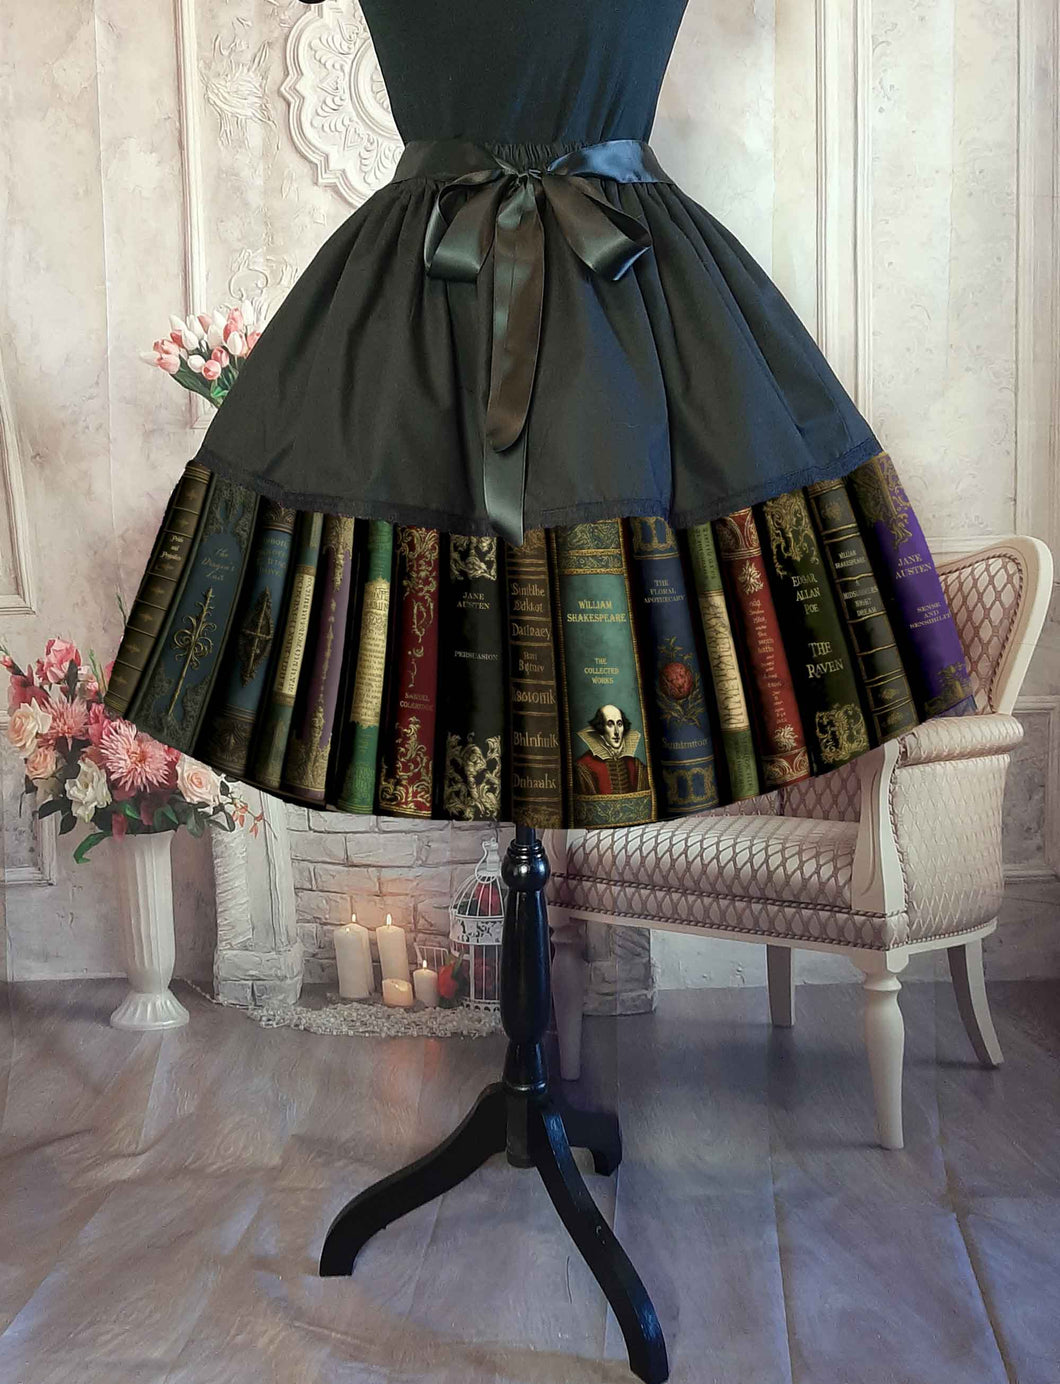 Vintage Library Books 50's Style Full Skirt - Rockabilly Dark Academia Skirt